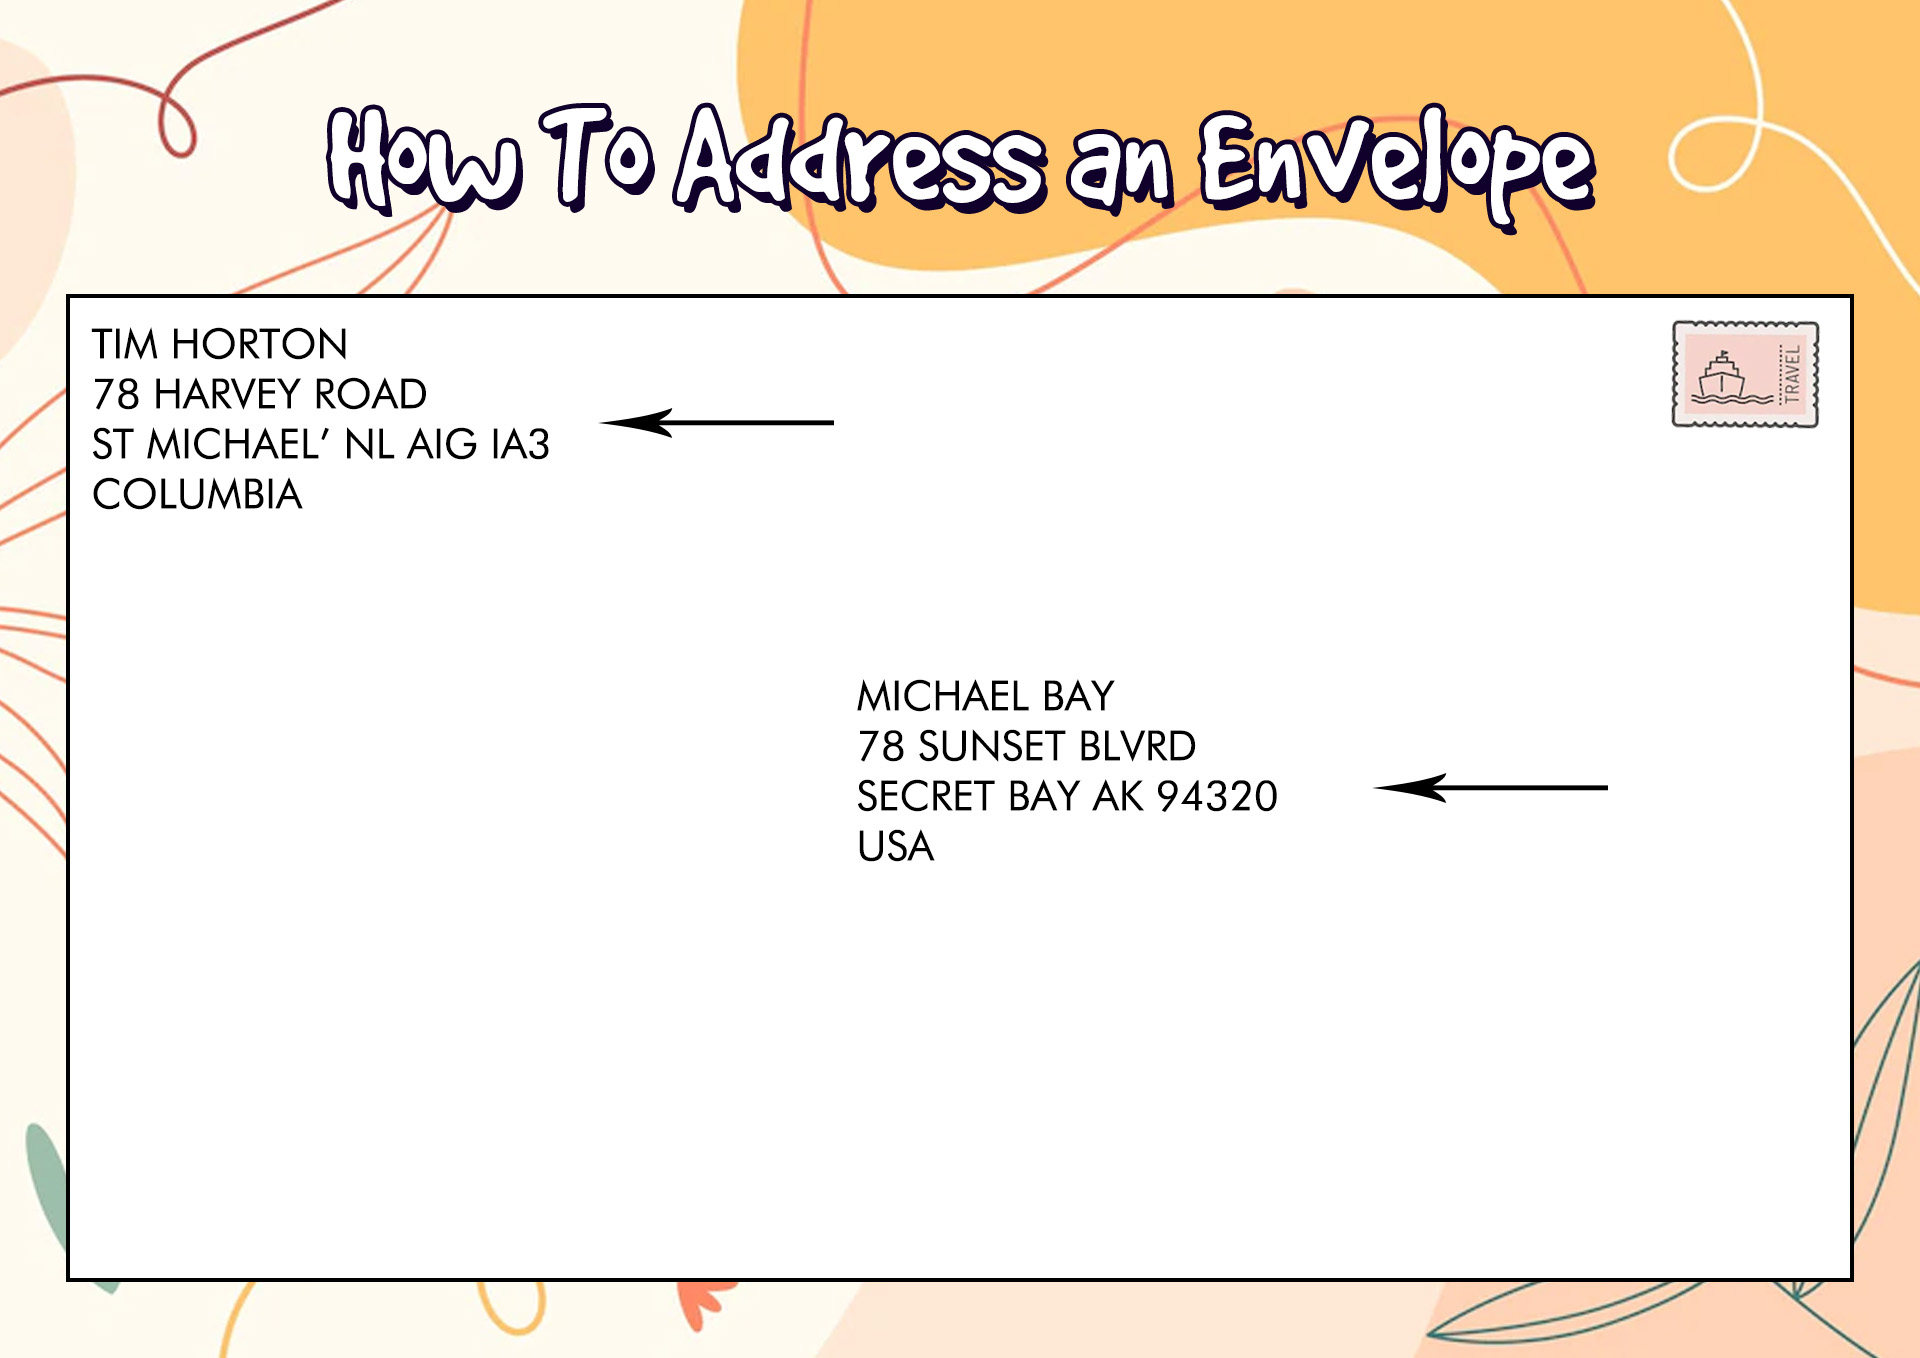 Punctuation of Proper Envelope Address Image